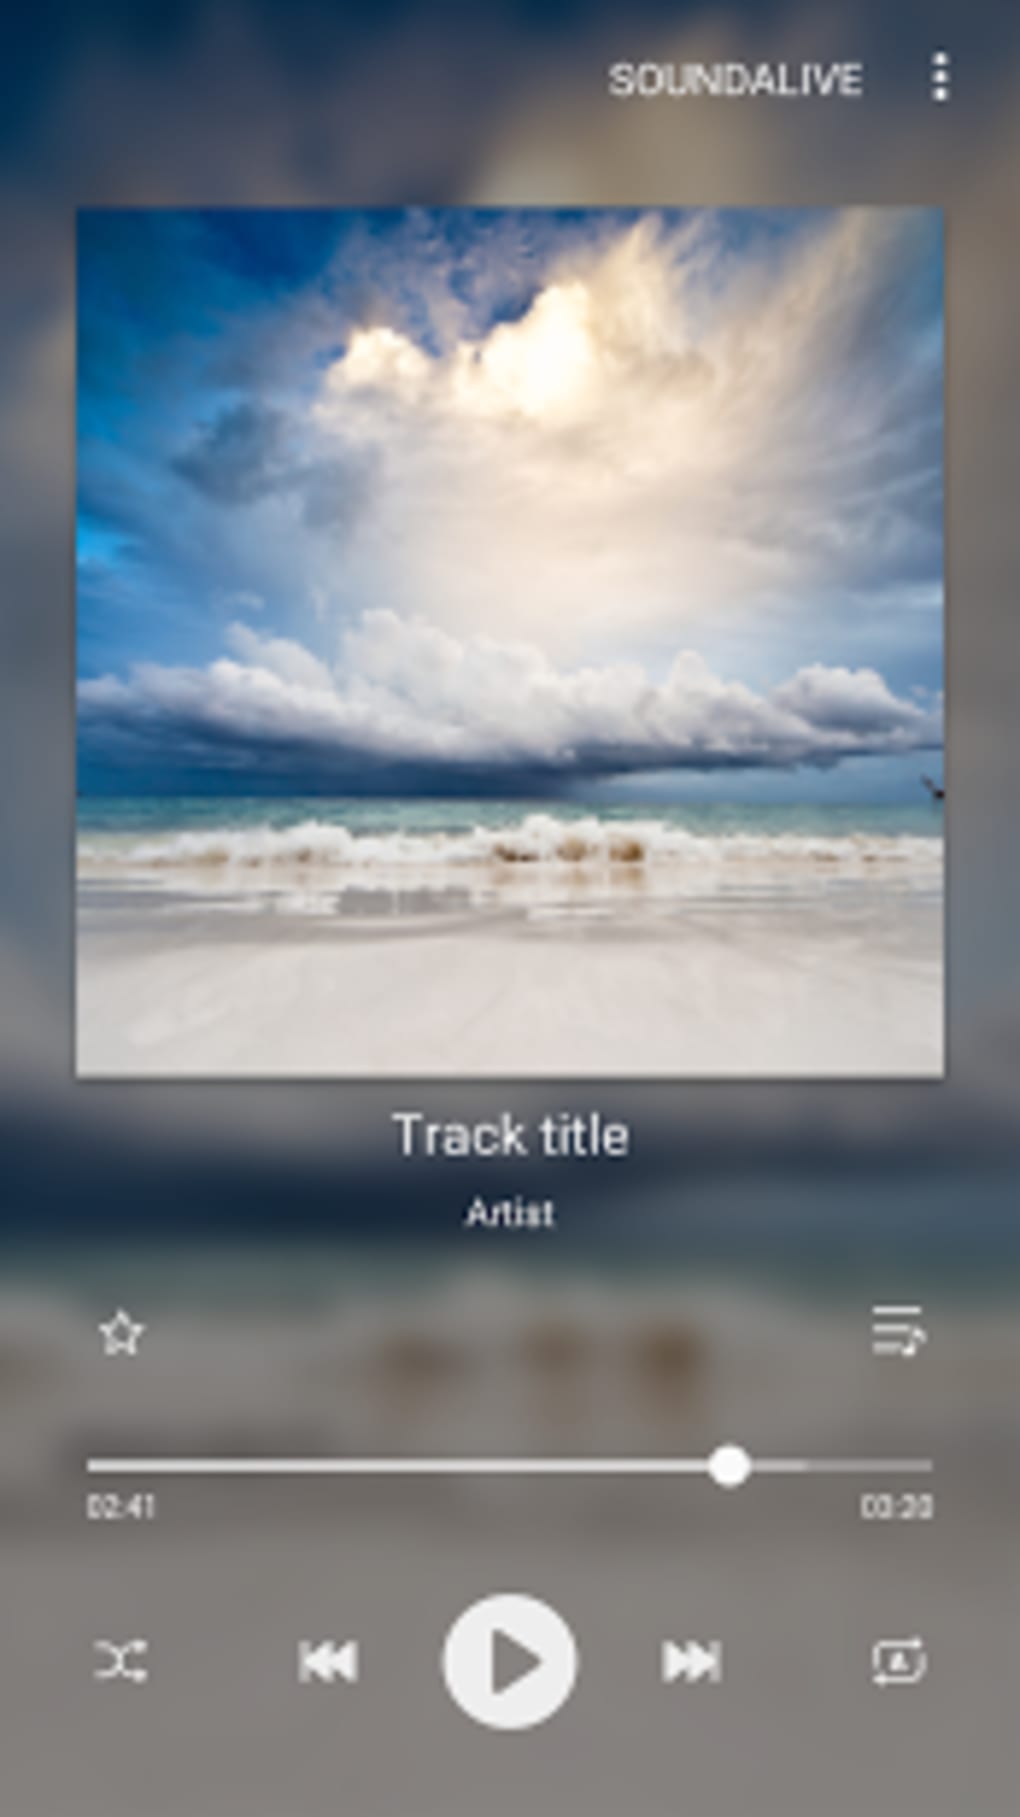 Aplikasi My Musik Samsung Samsung Music Apps On Google Play / Tak